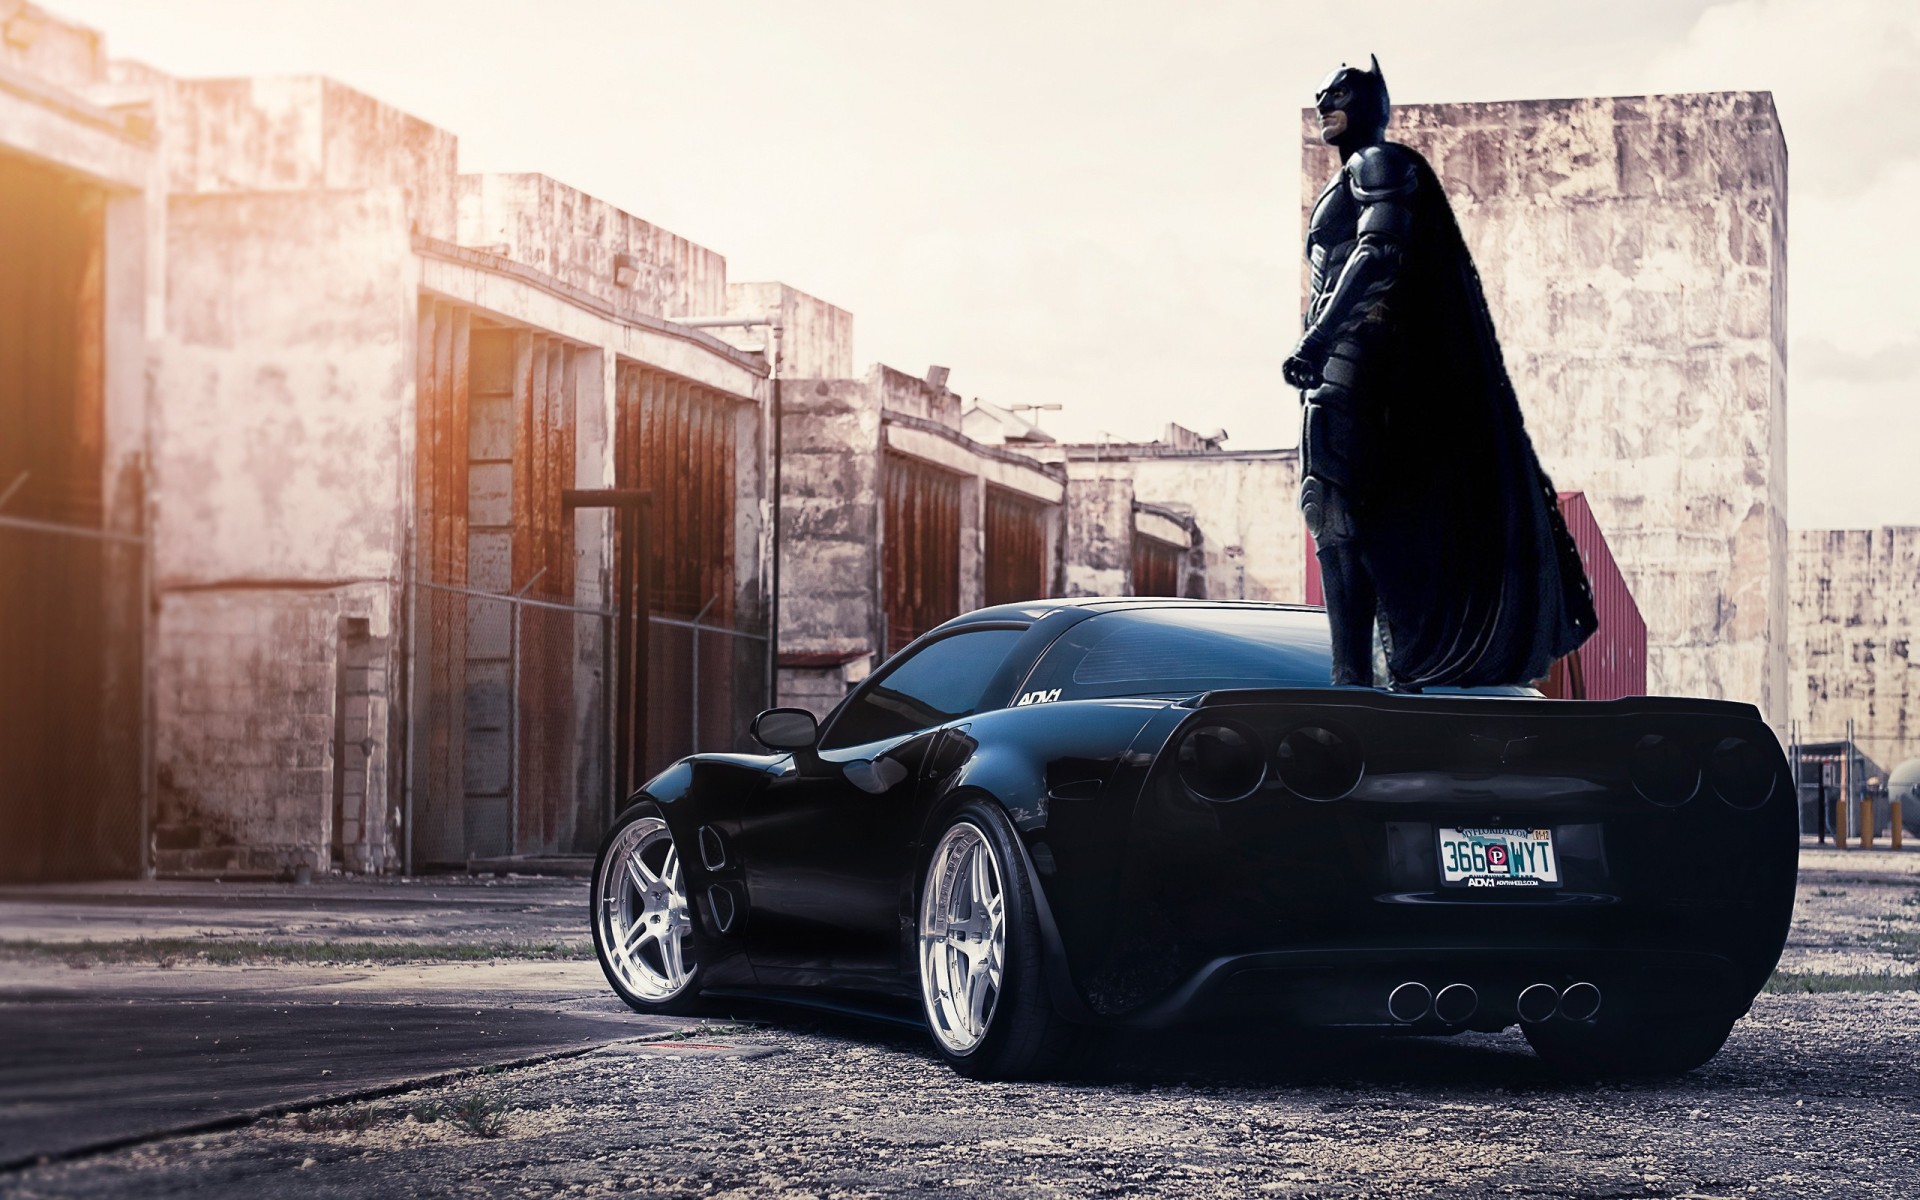 Batman On The Car Widescreen Wallpaper Wide